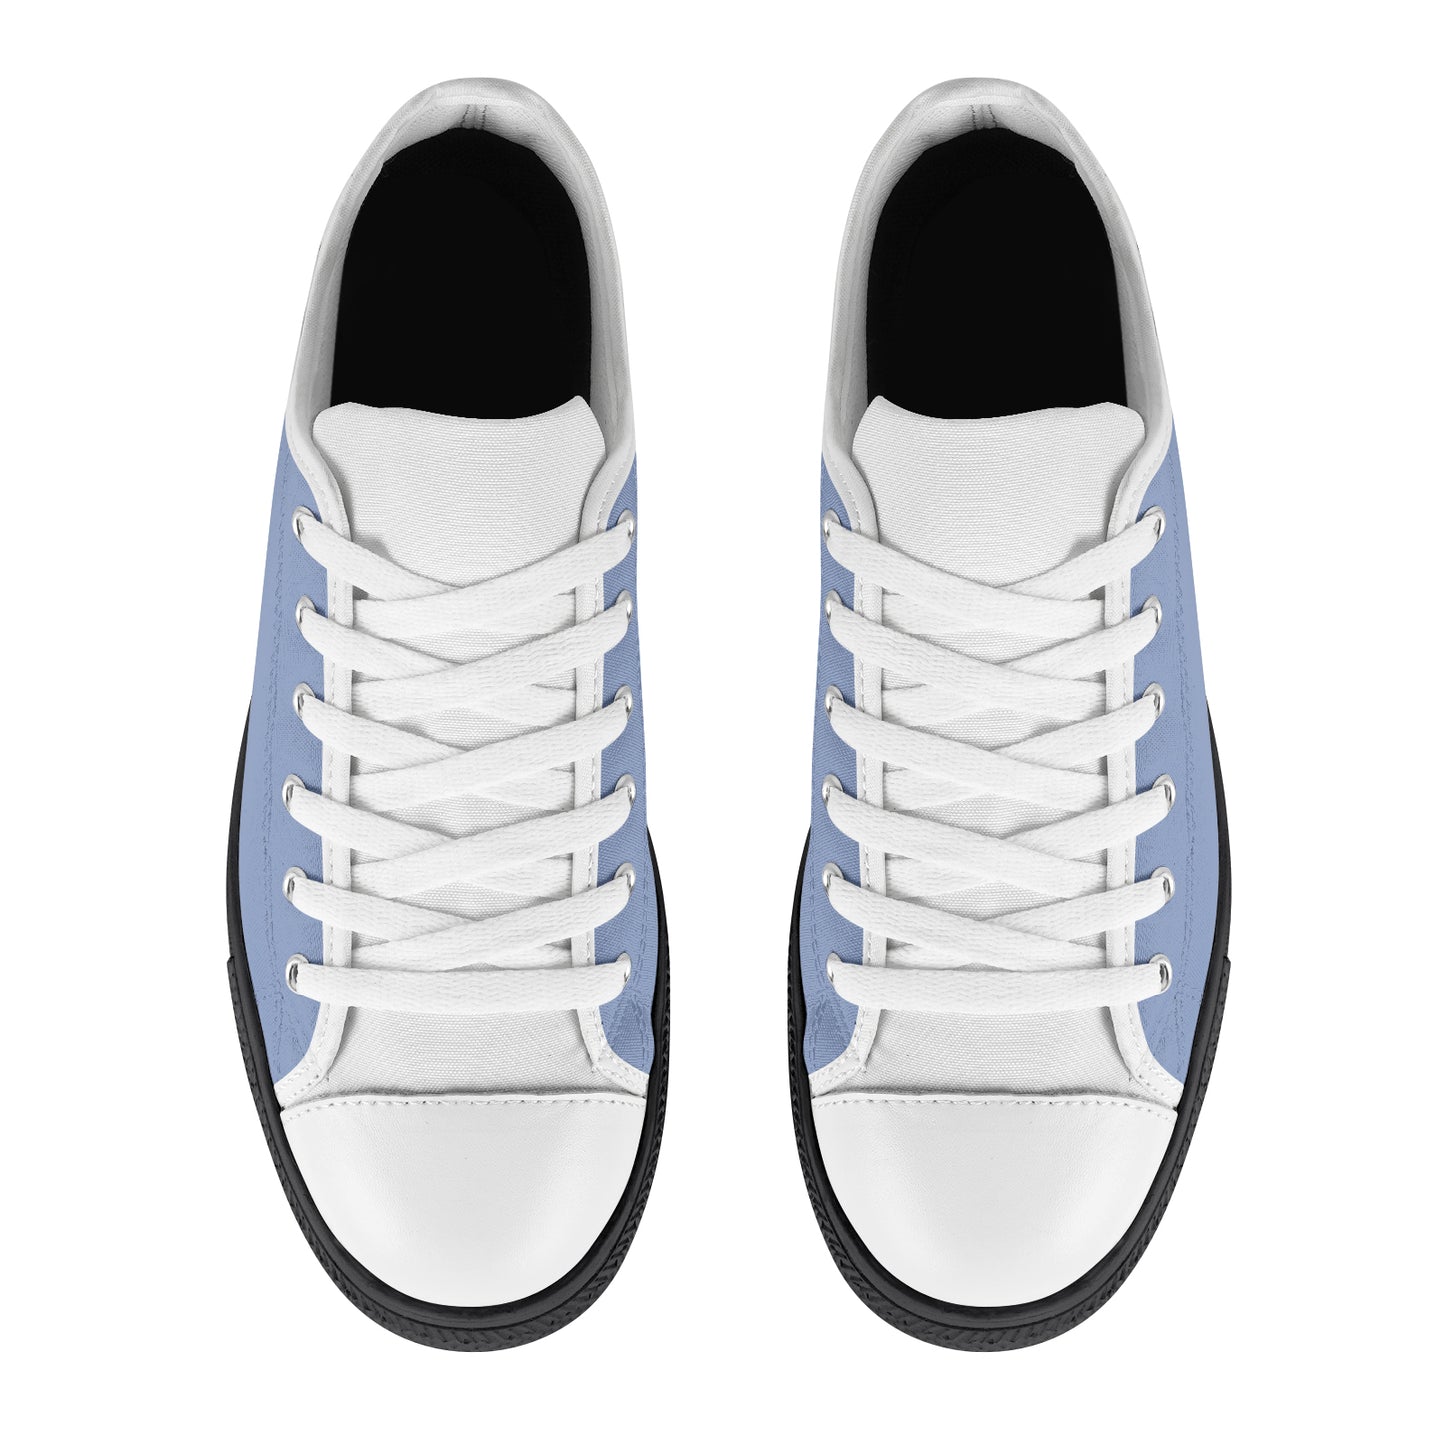 Men's Canvas Sneakers - Classic Blue